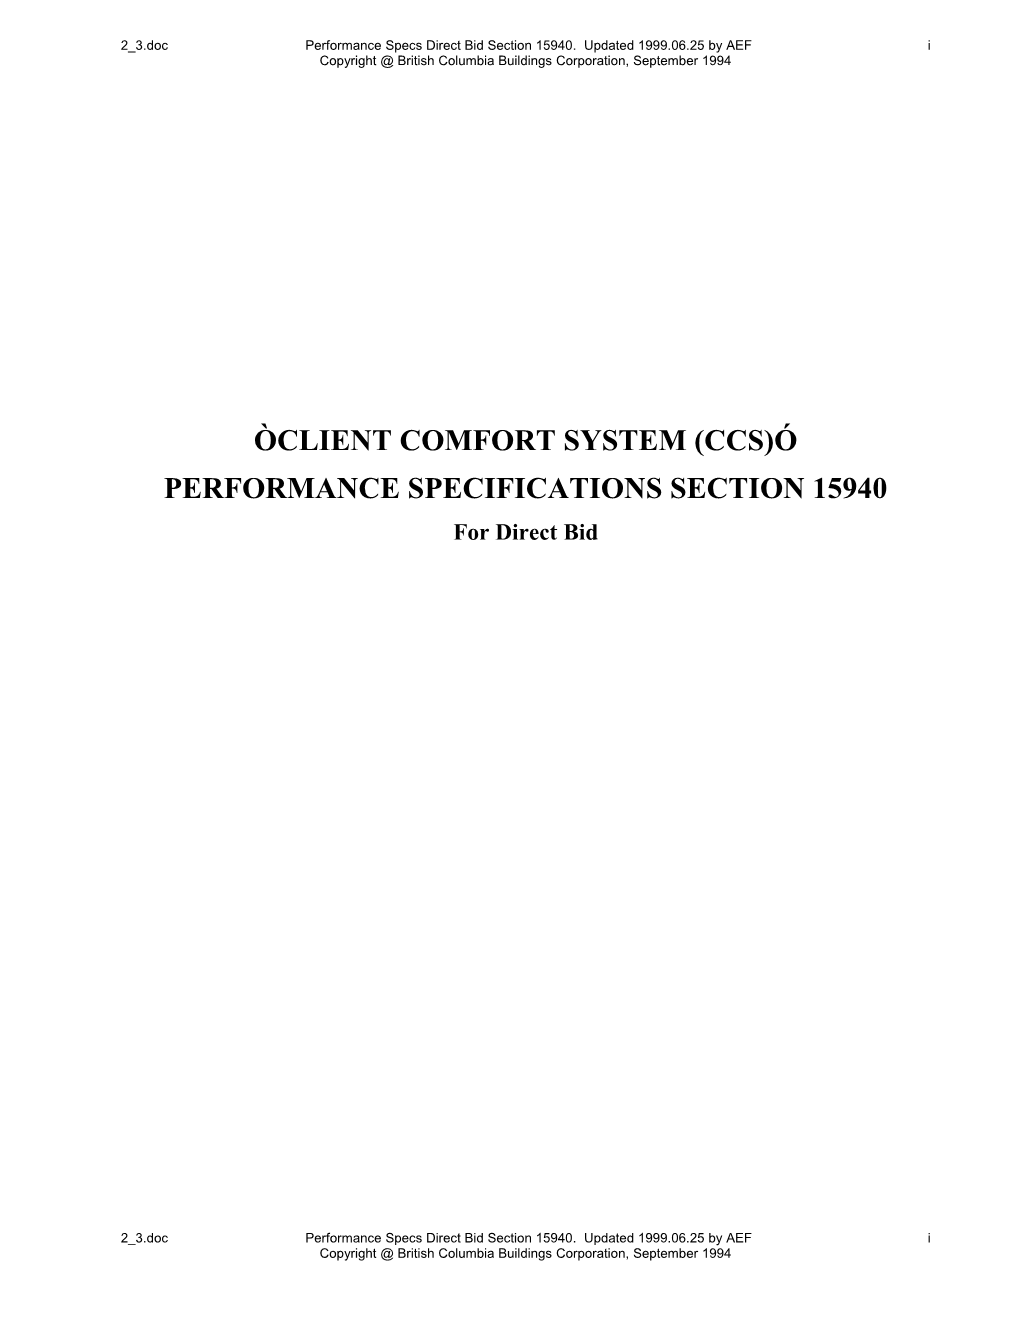 Section 2.3, Direct Bid Performance Specs